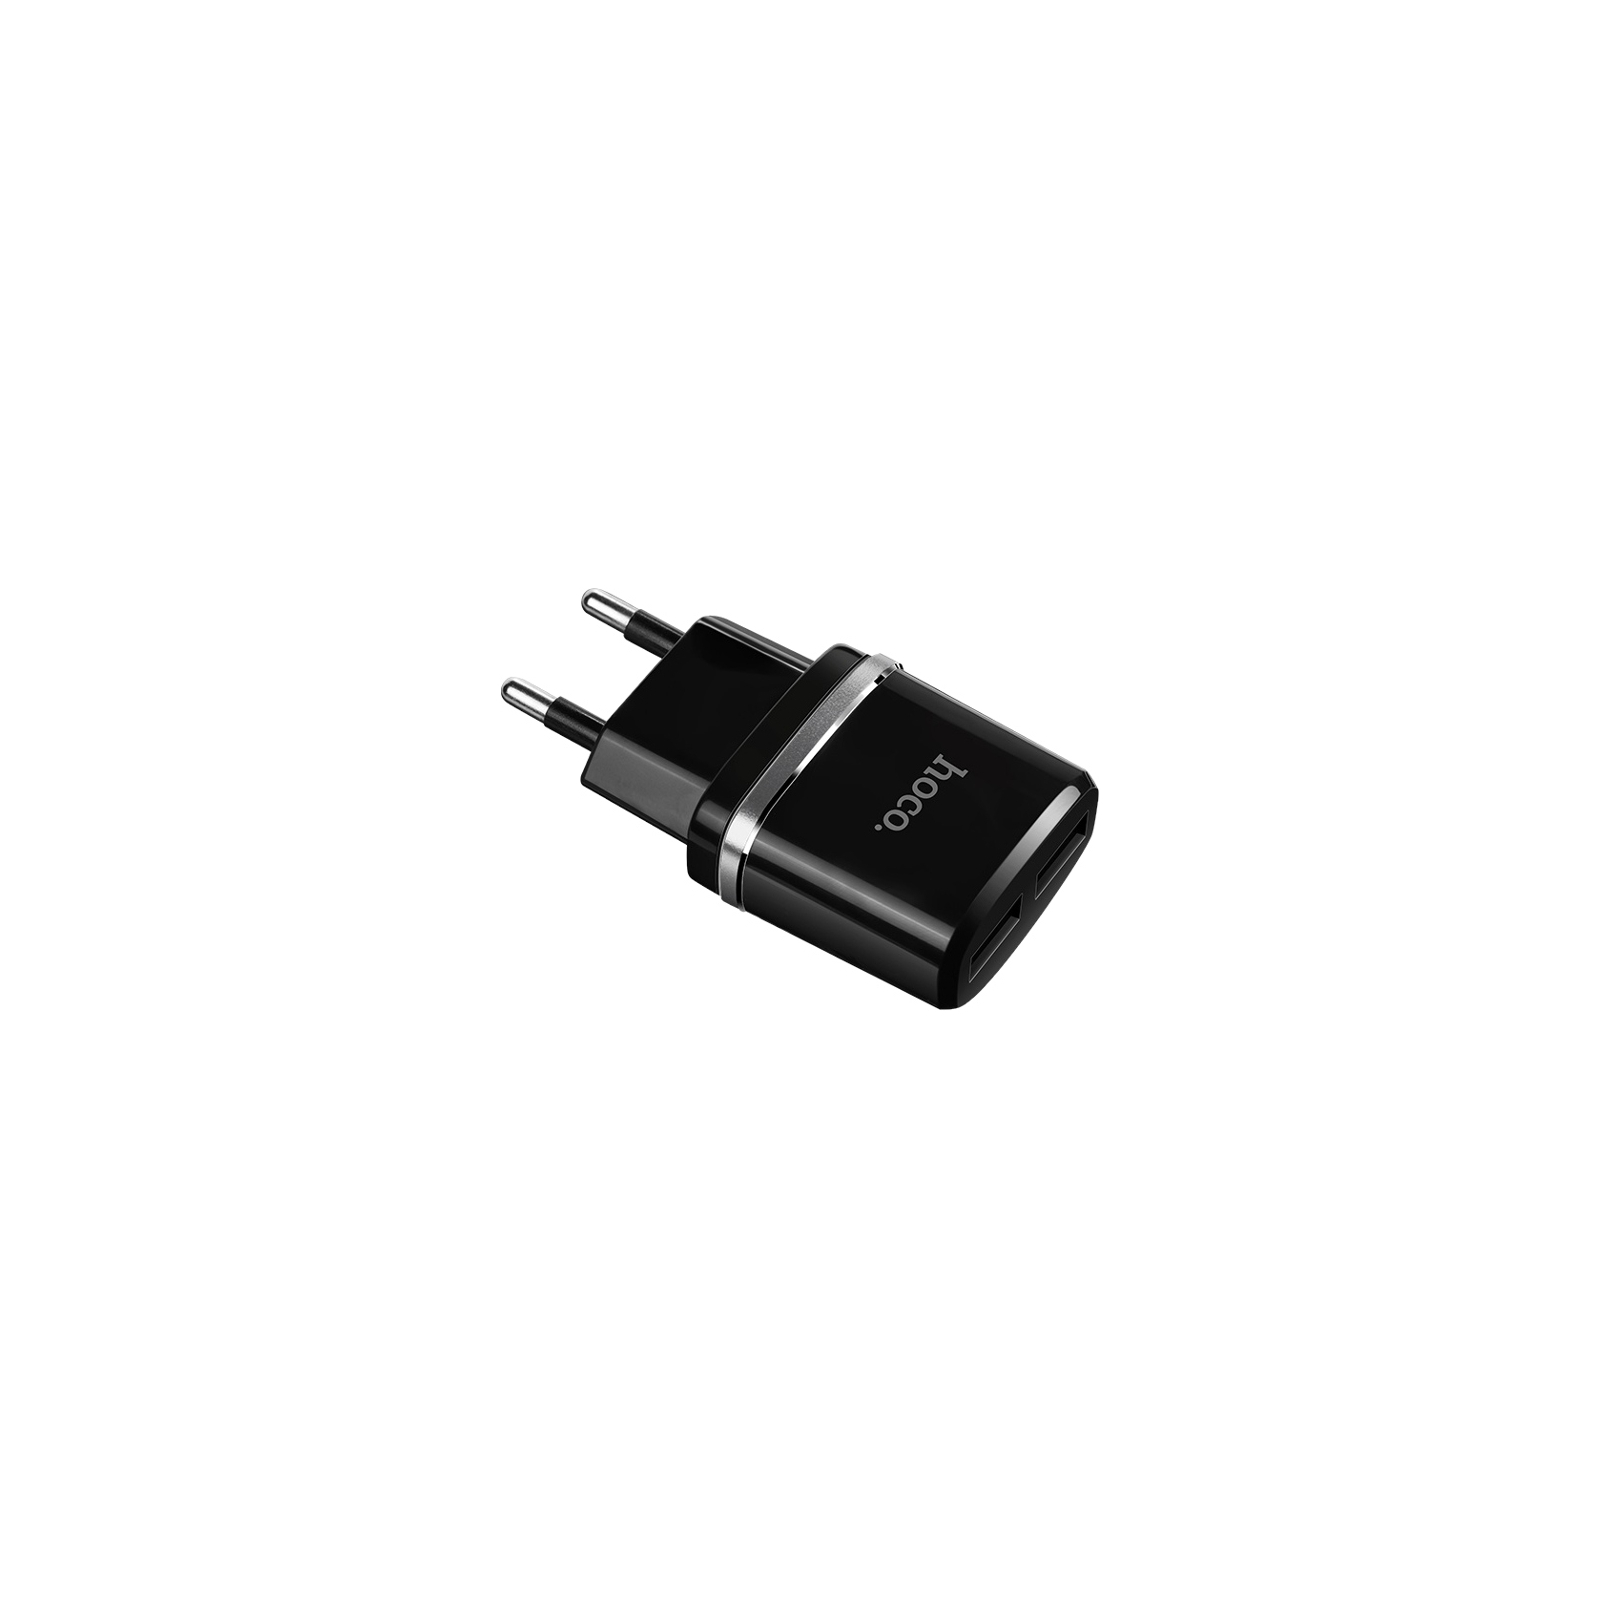 Зарядное устройство HOCO C12 Smart dual USB (Micro cable)charger set White (6957531047773) изображение 3